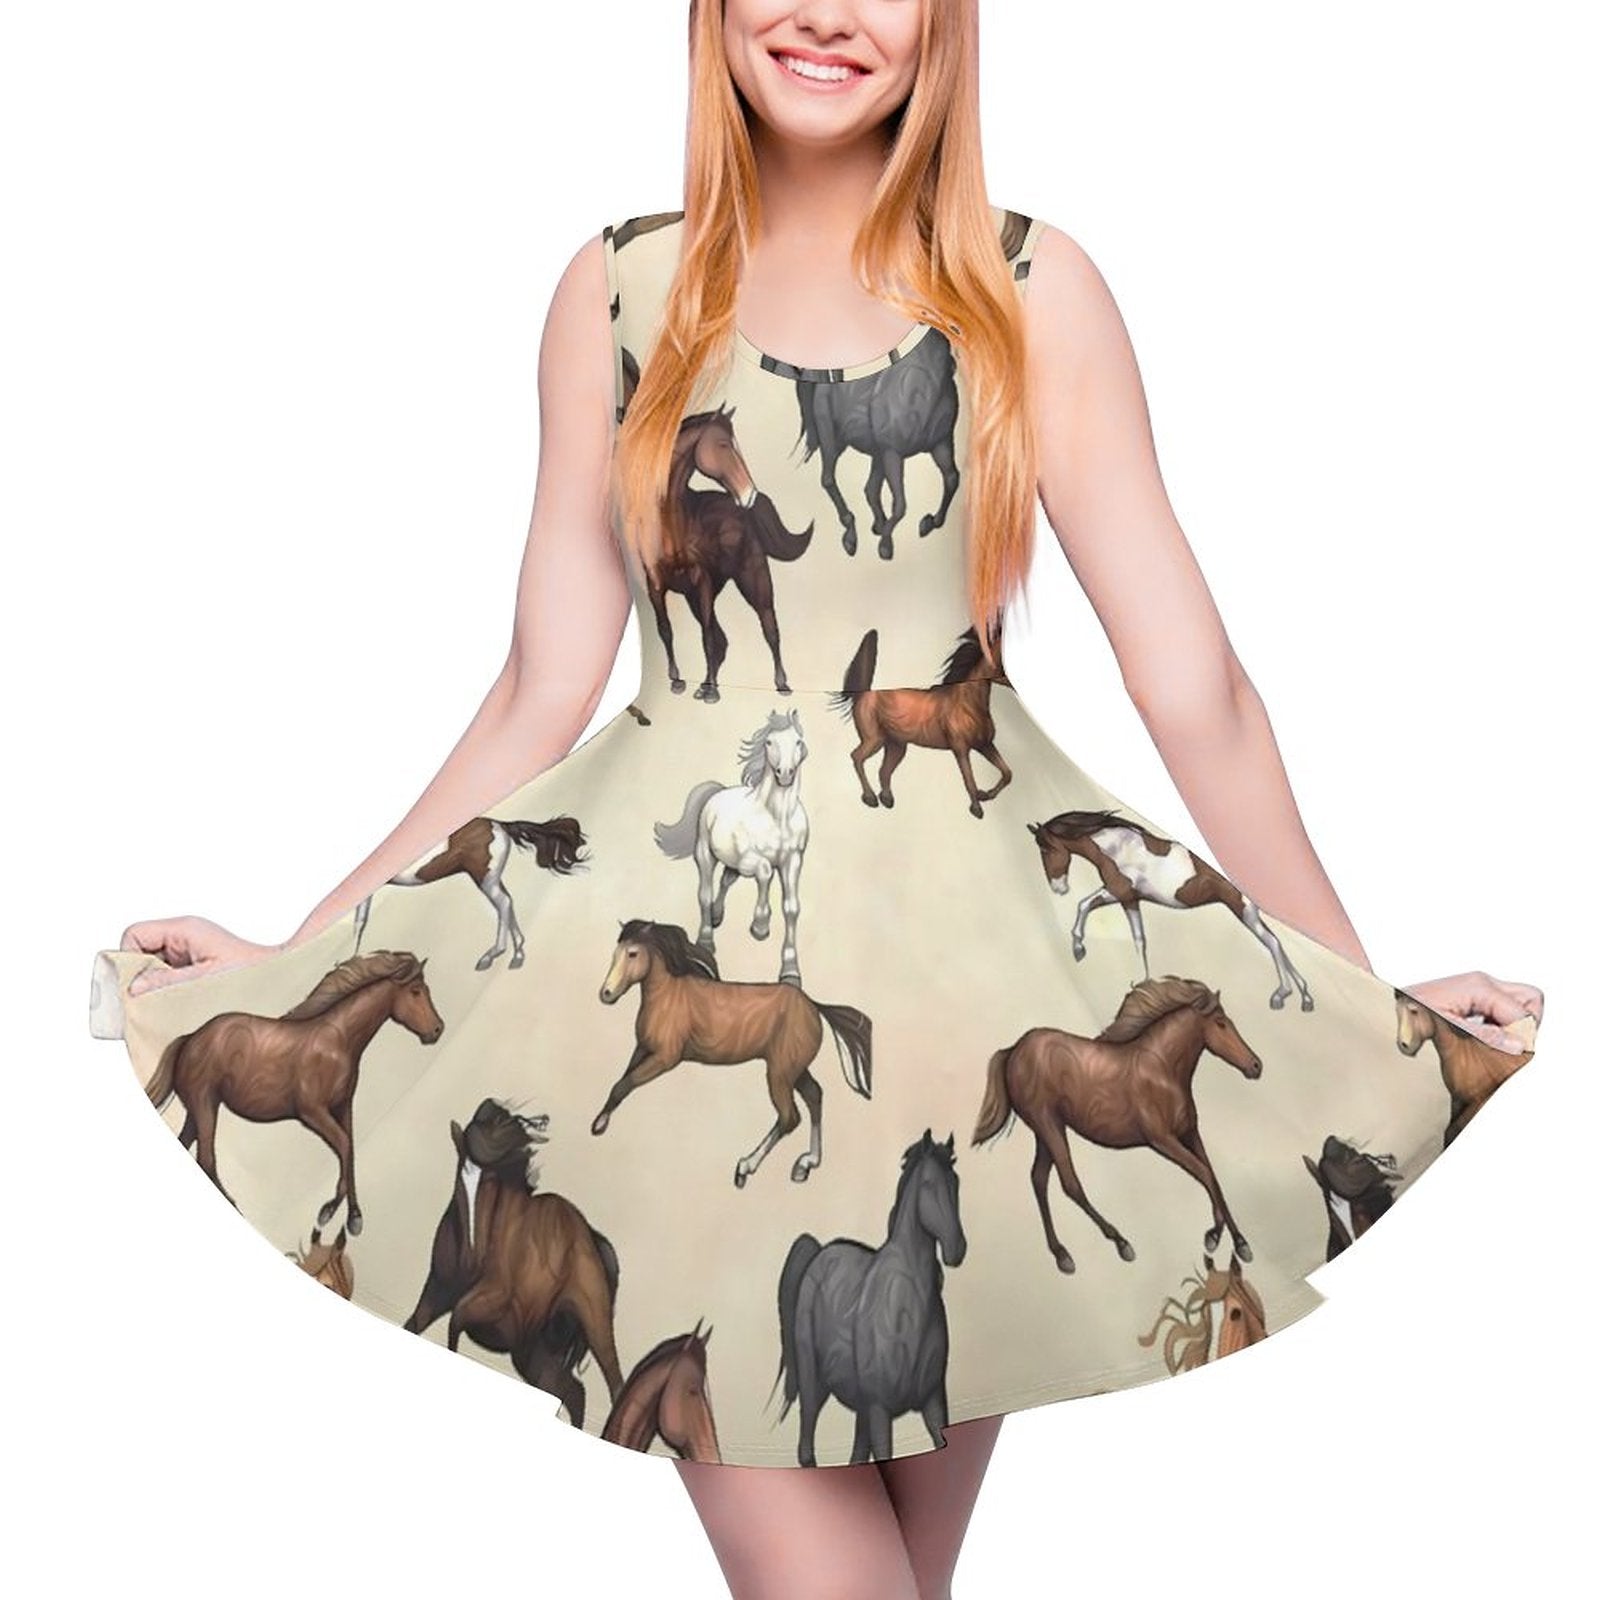 Horse riding dress